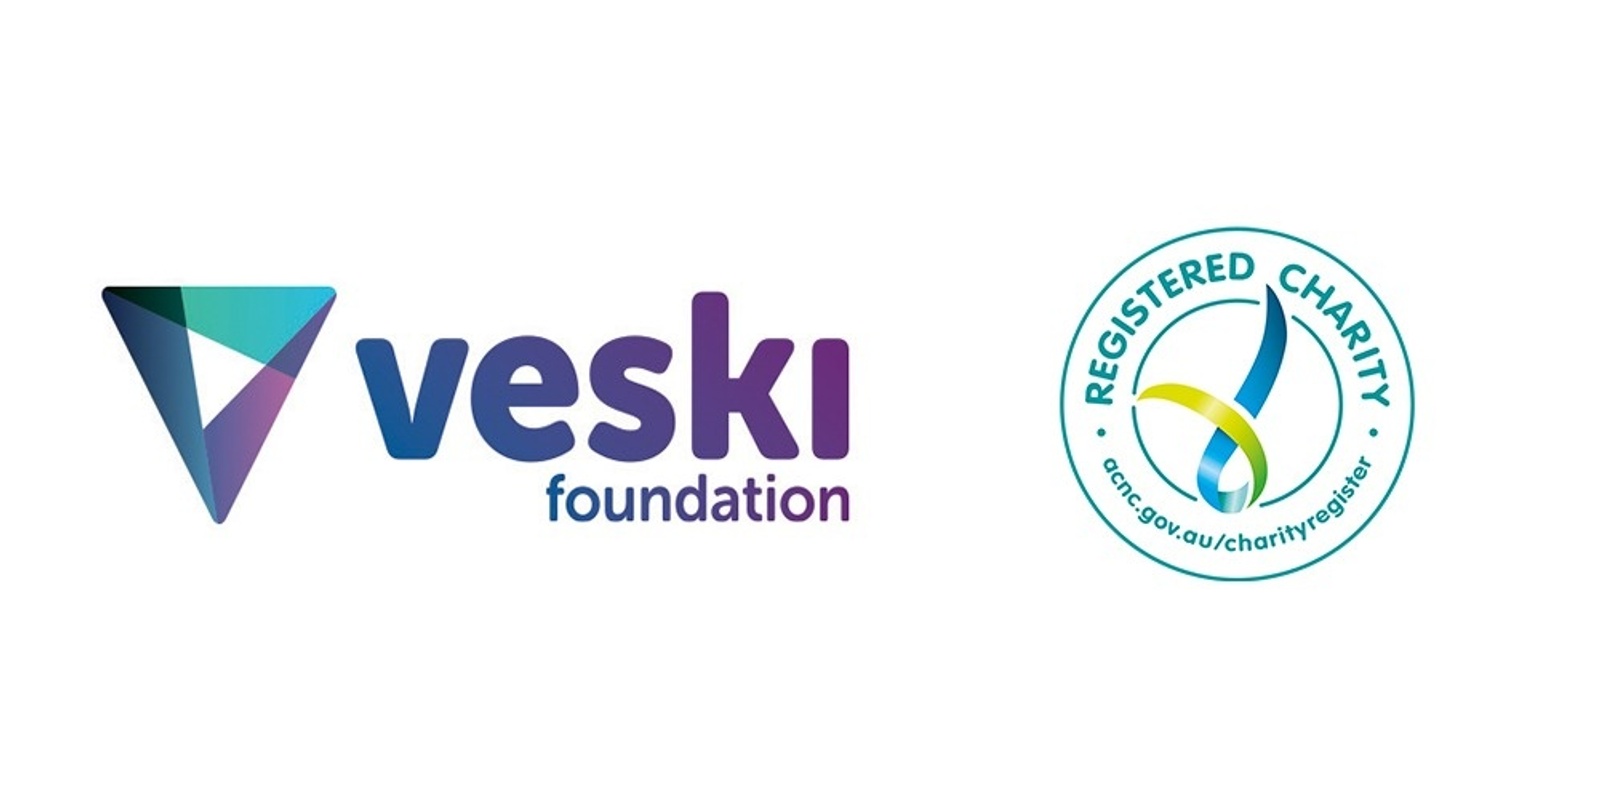 The Trustee for The veski Foundation Trust